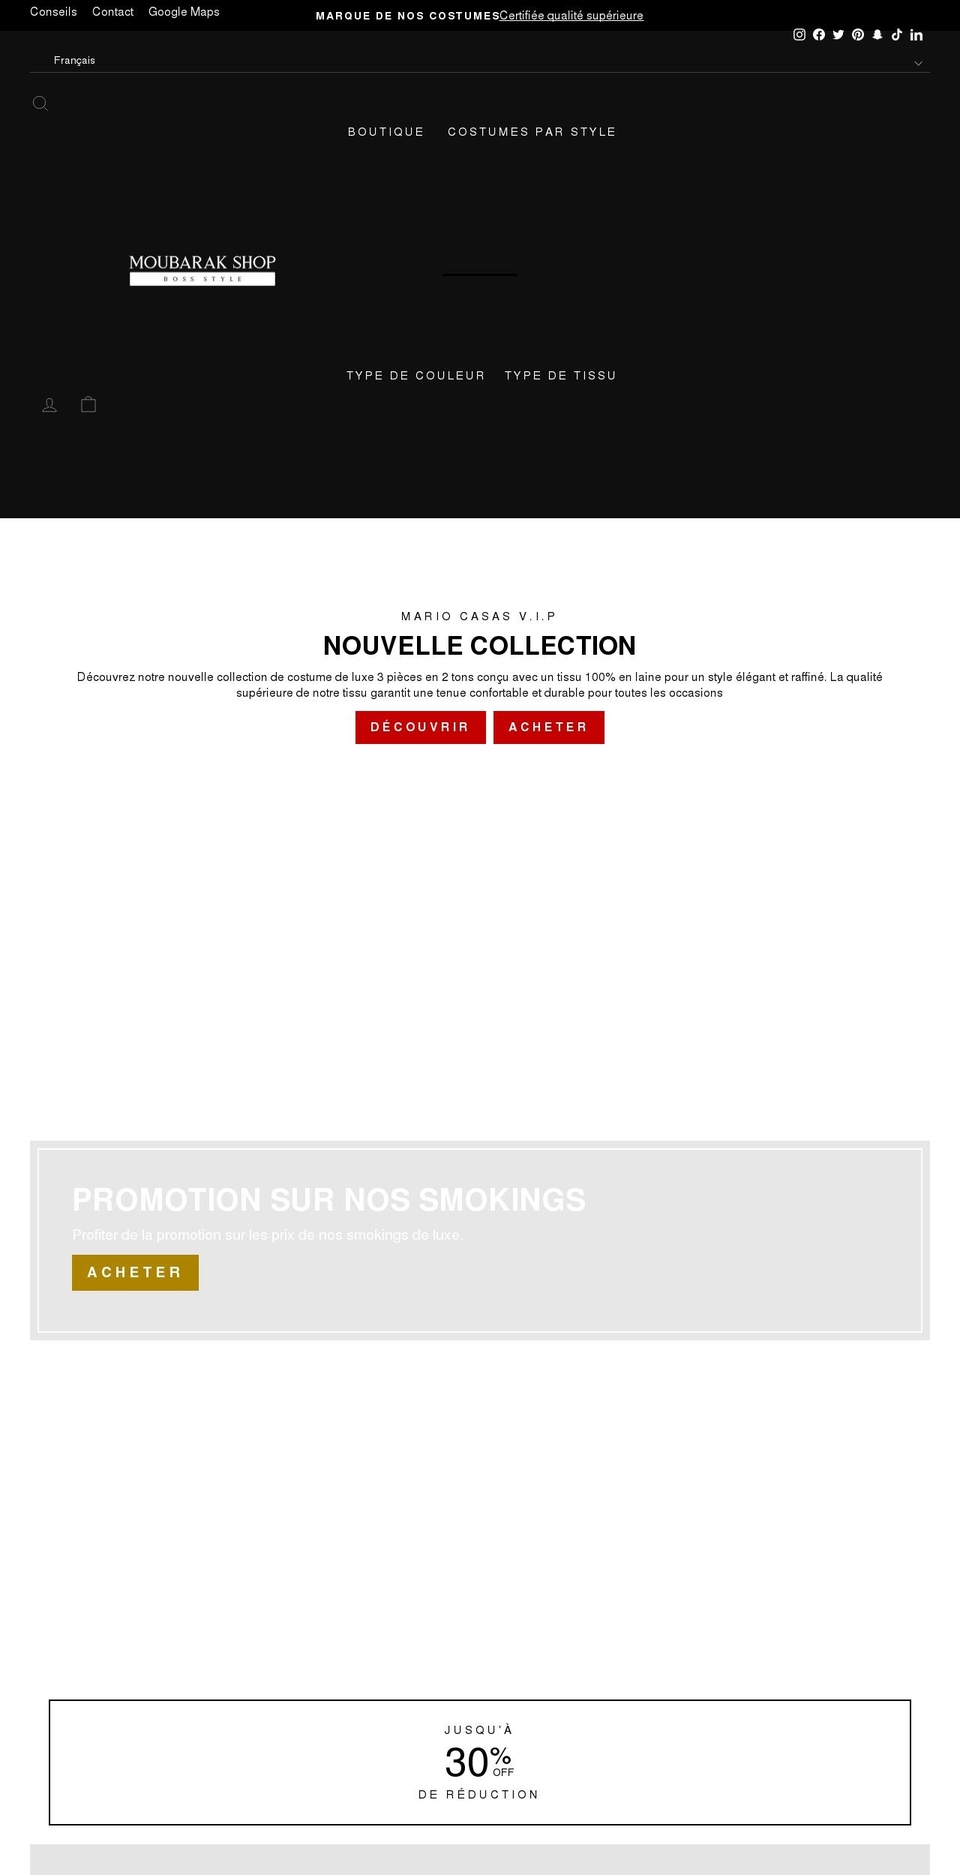 moubarak.shop shopify website screenshot